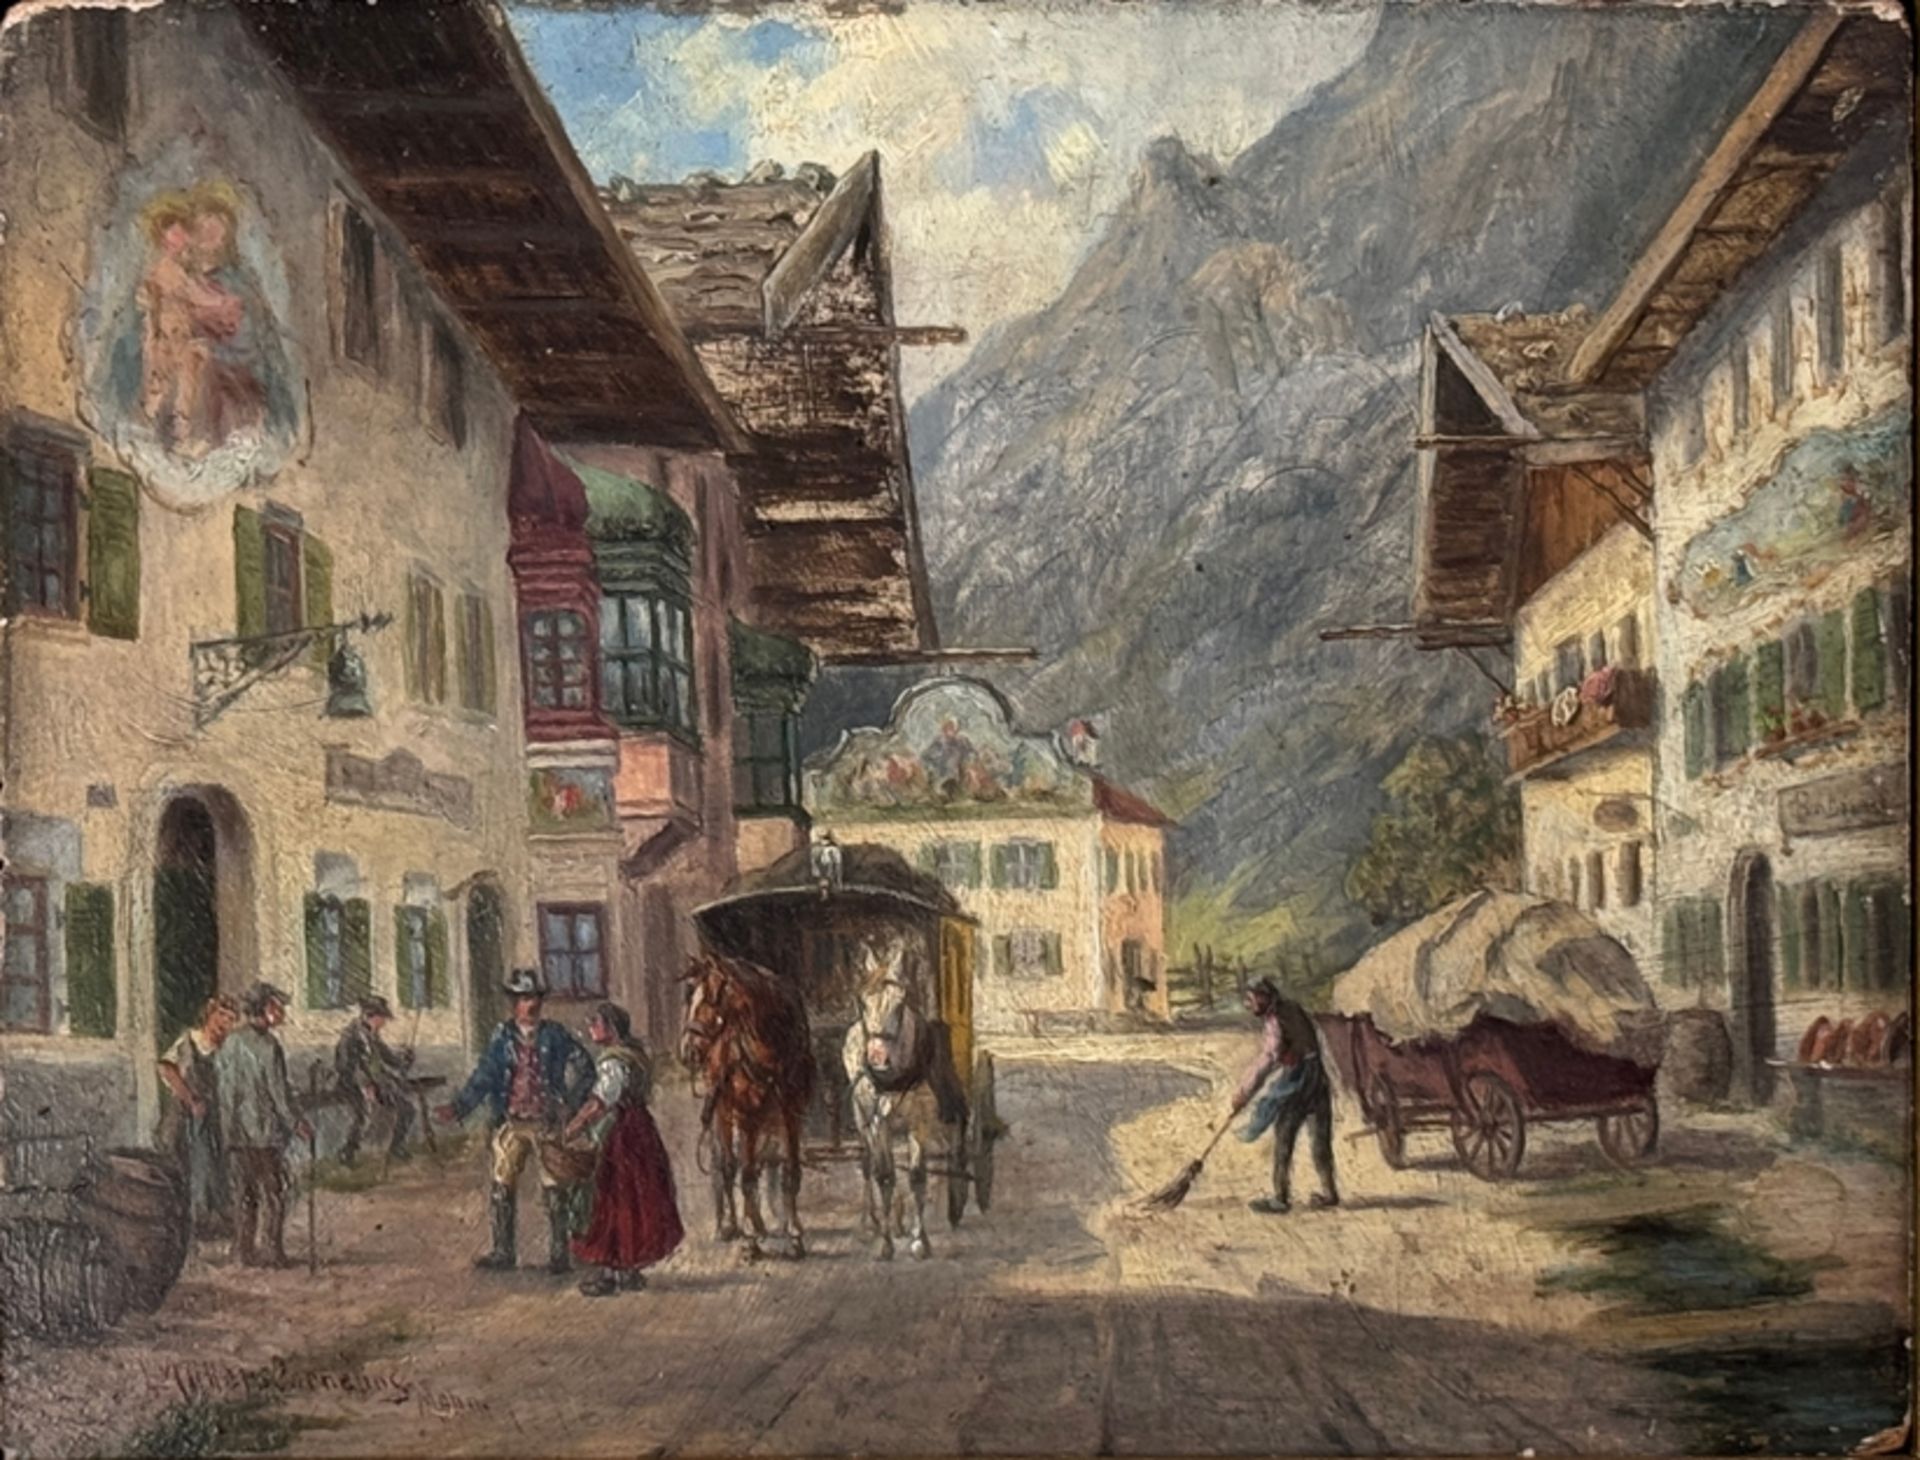 Müller-Cornelius, Ludwig (1864 - 1946 Munich) "Mountain village", view of an idyllic village in the